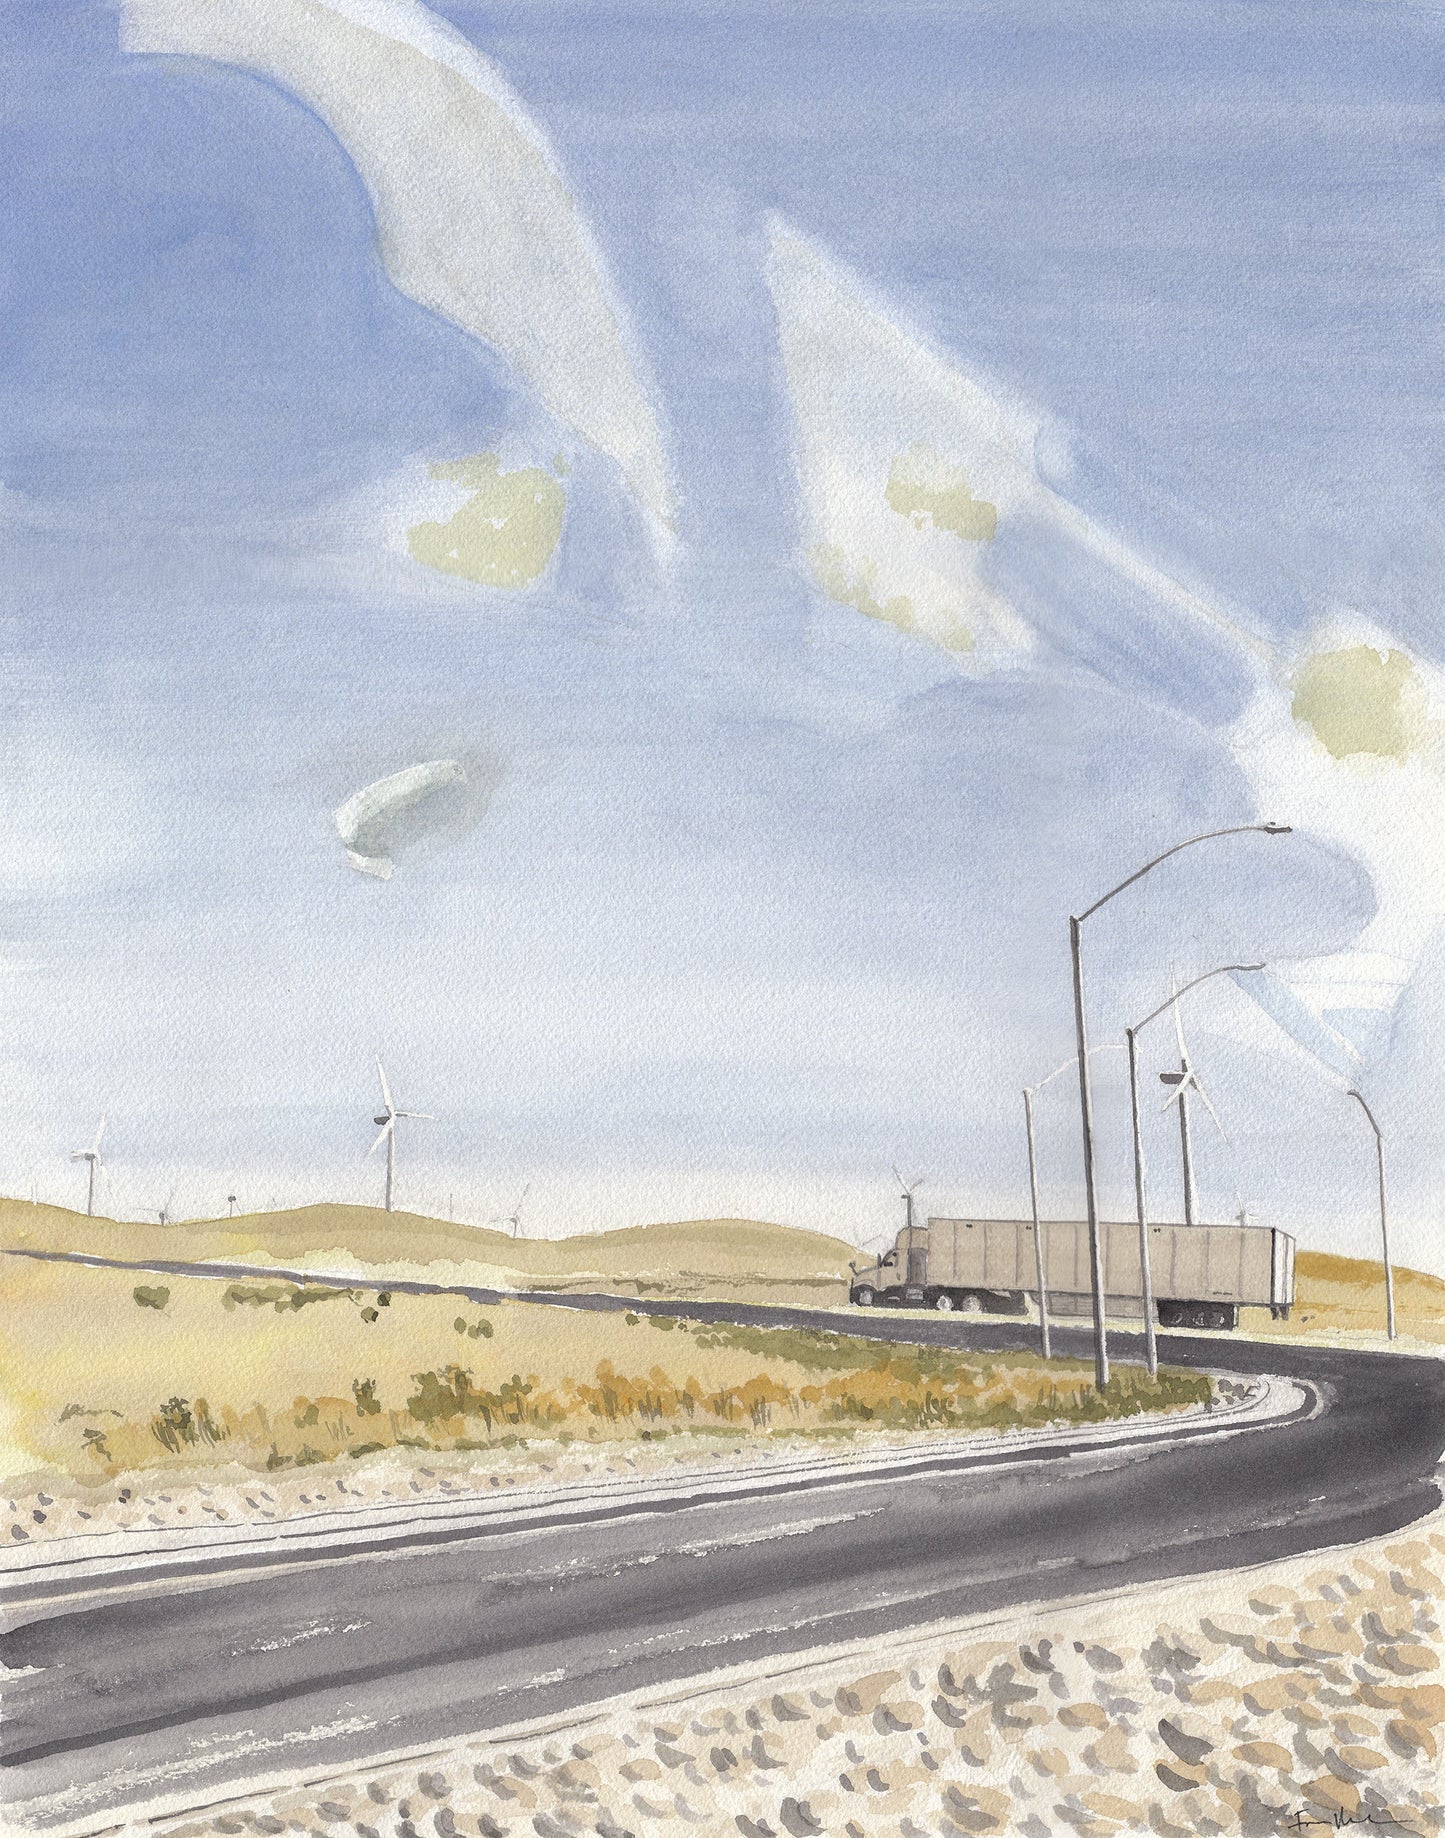 Driving Past Wind Turbines, Part 2, Highway Scene